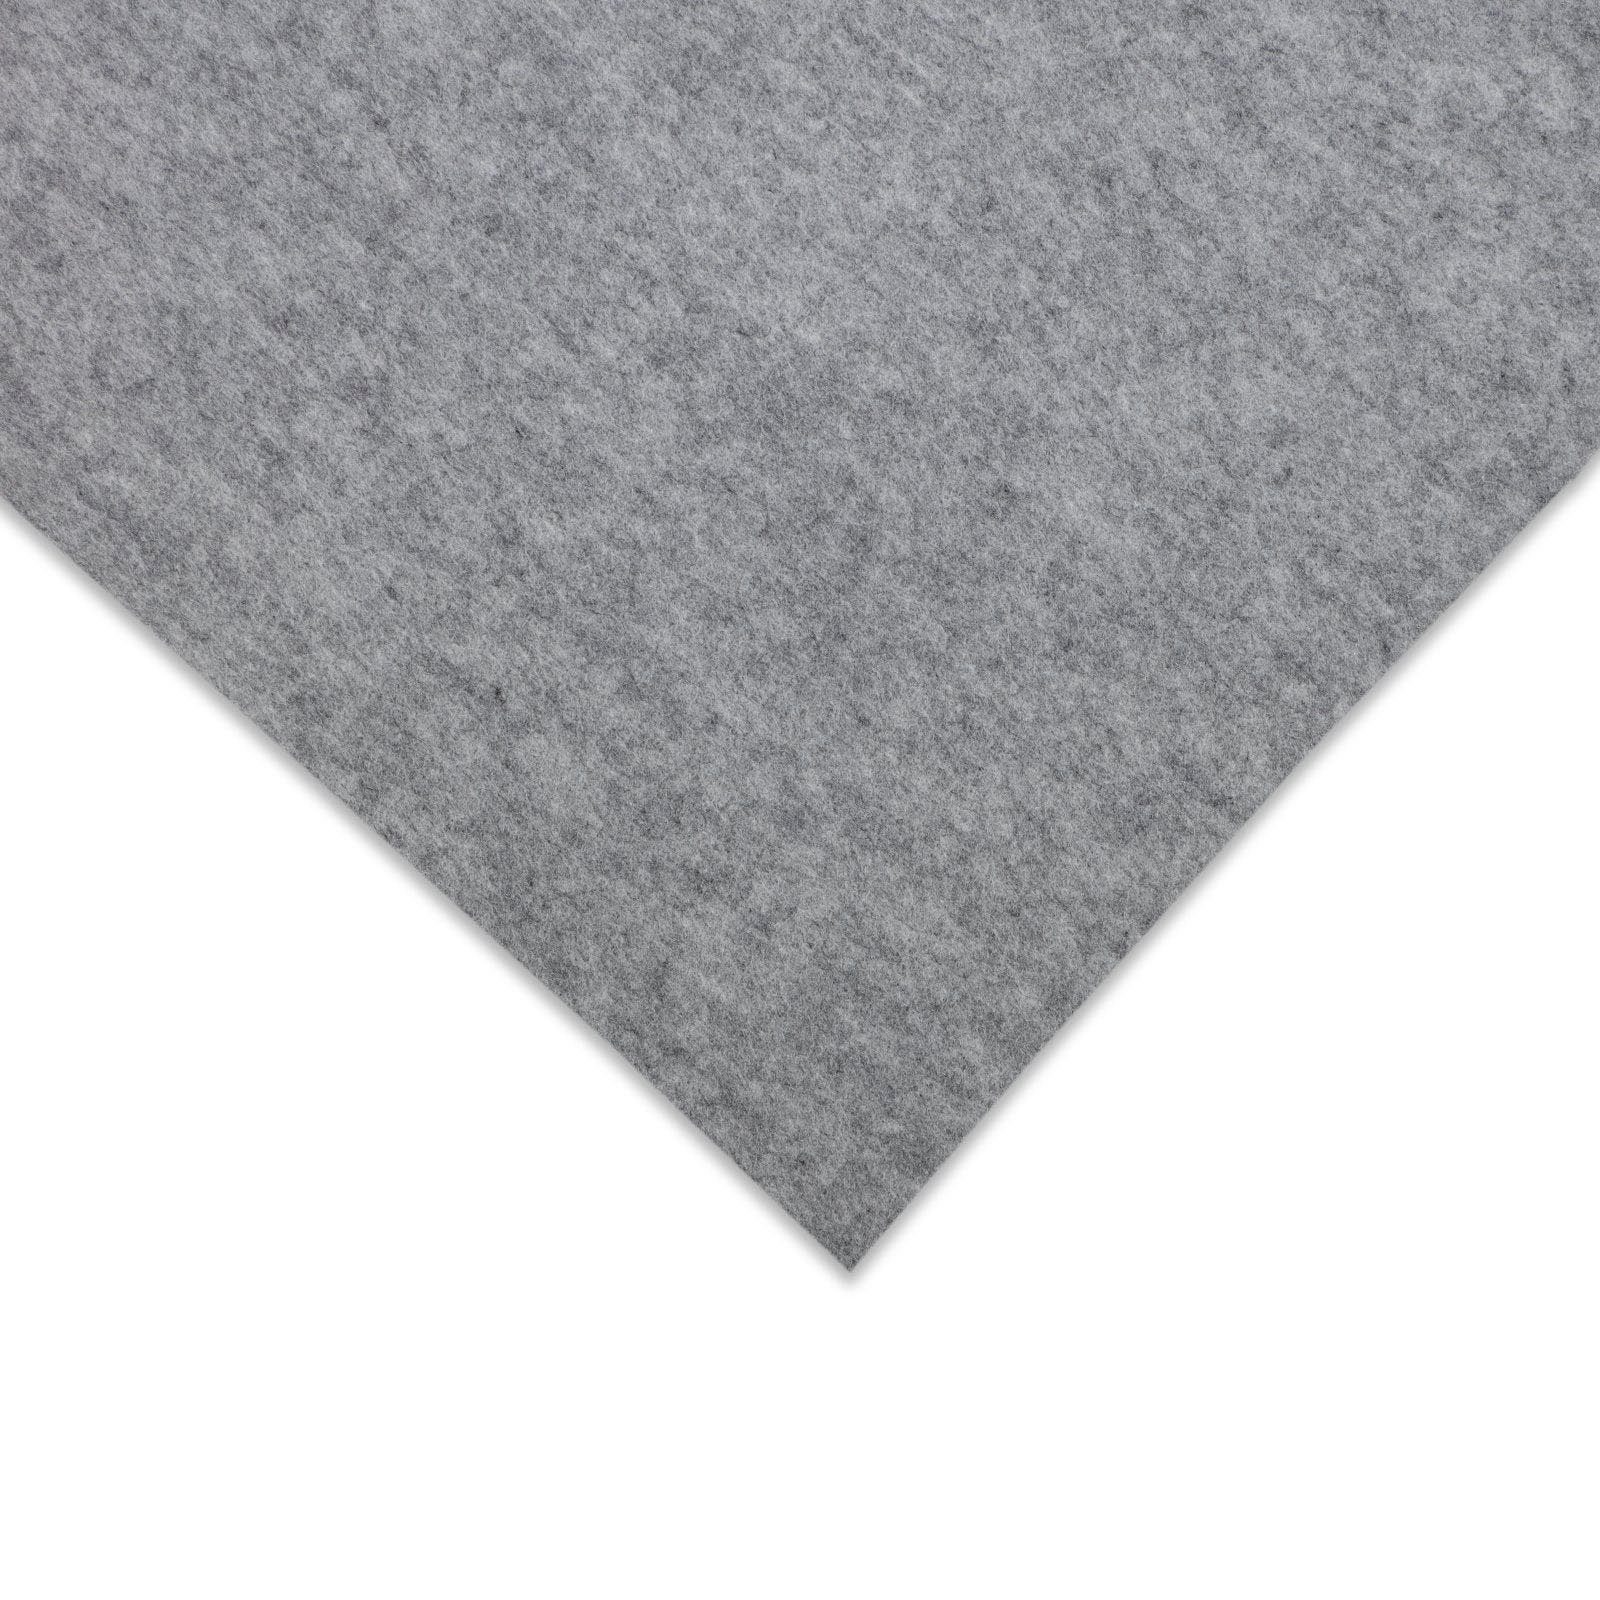 Teppichboden Superflex, my & home, verschiedene mm, Höhe: Nadelfilz, Größen rechteckig, 4 Farben Hellgrau